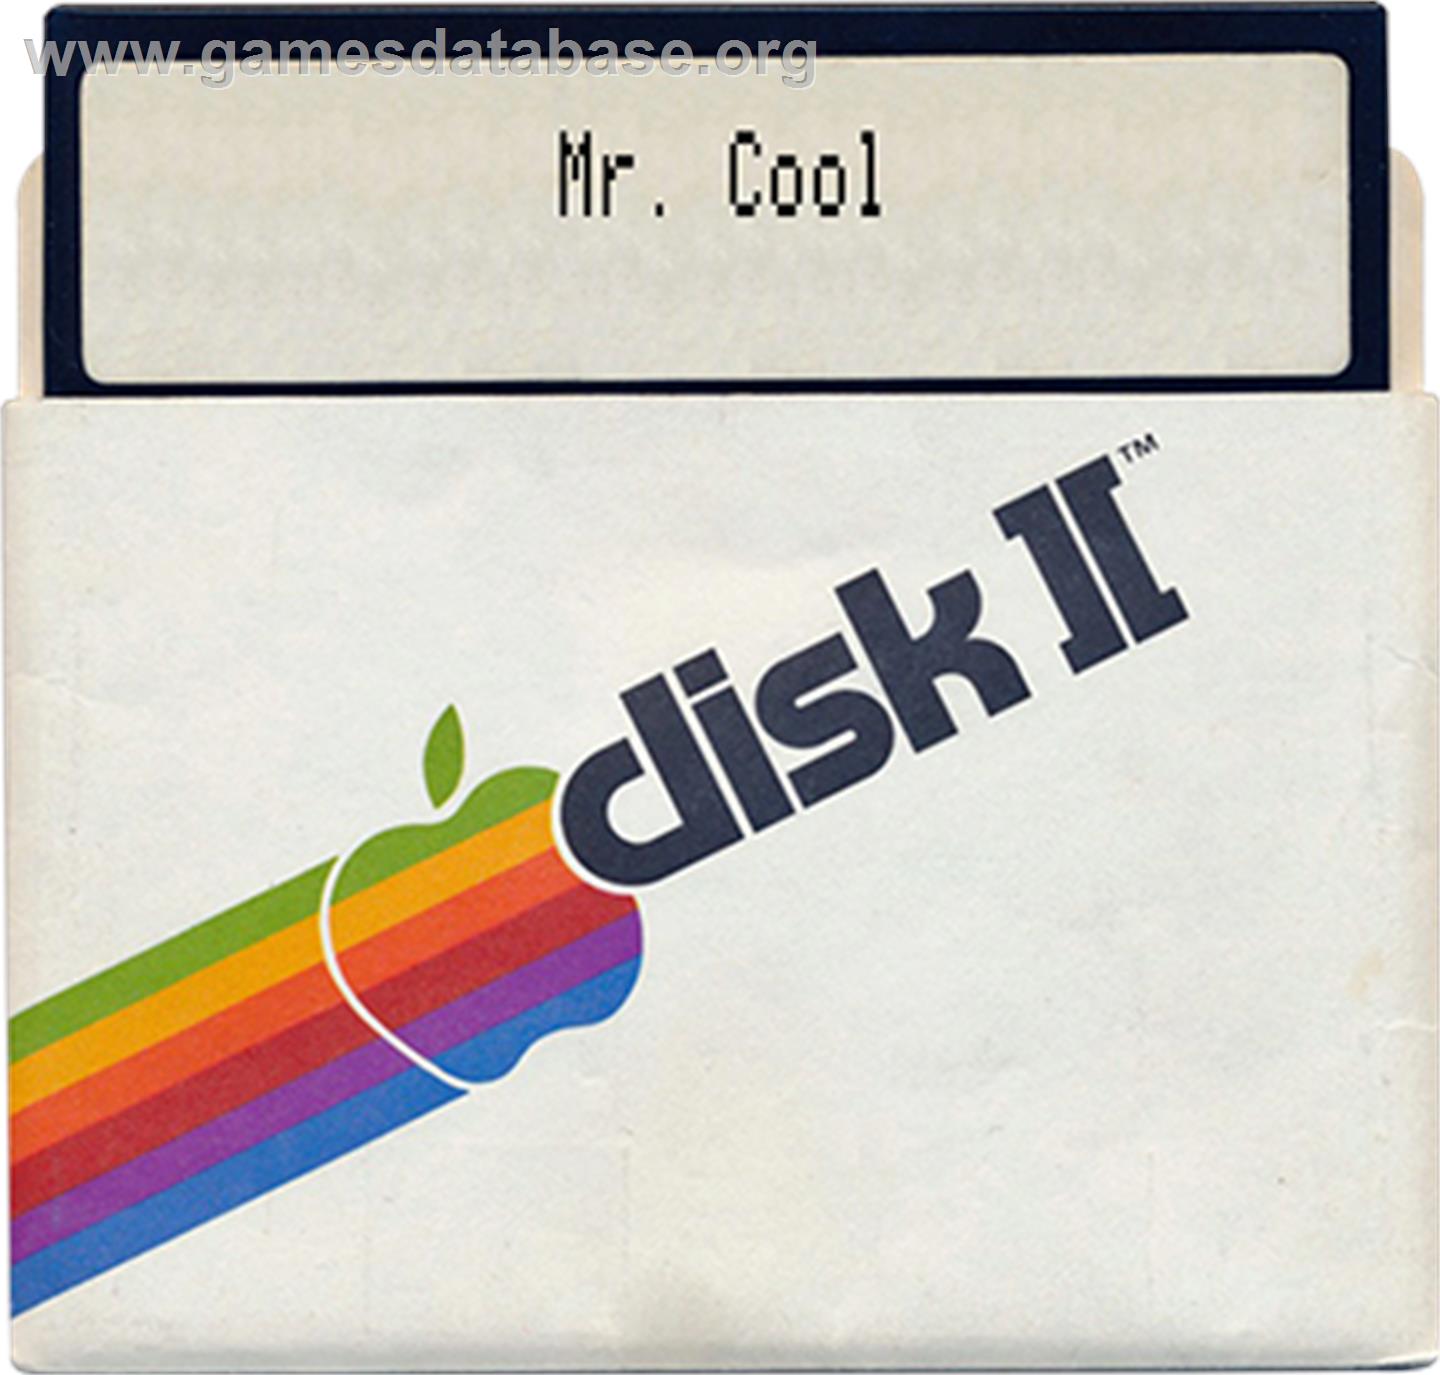 Mr. Cool - Apple II - Artwork - Disc